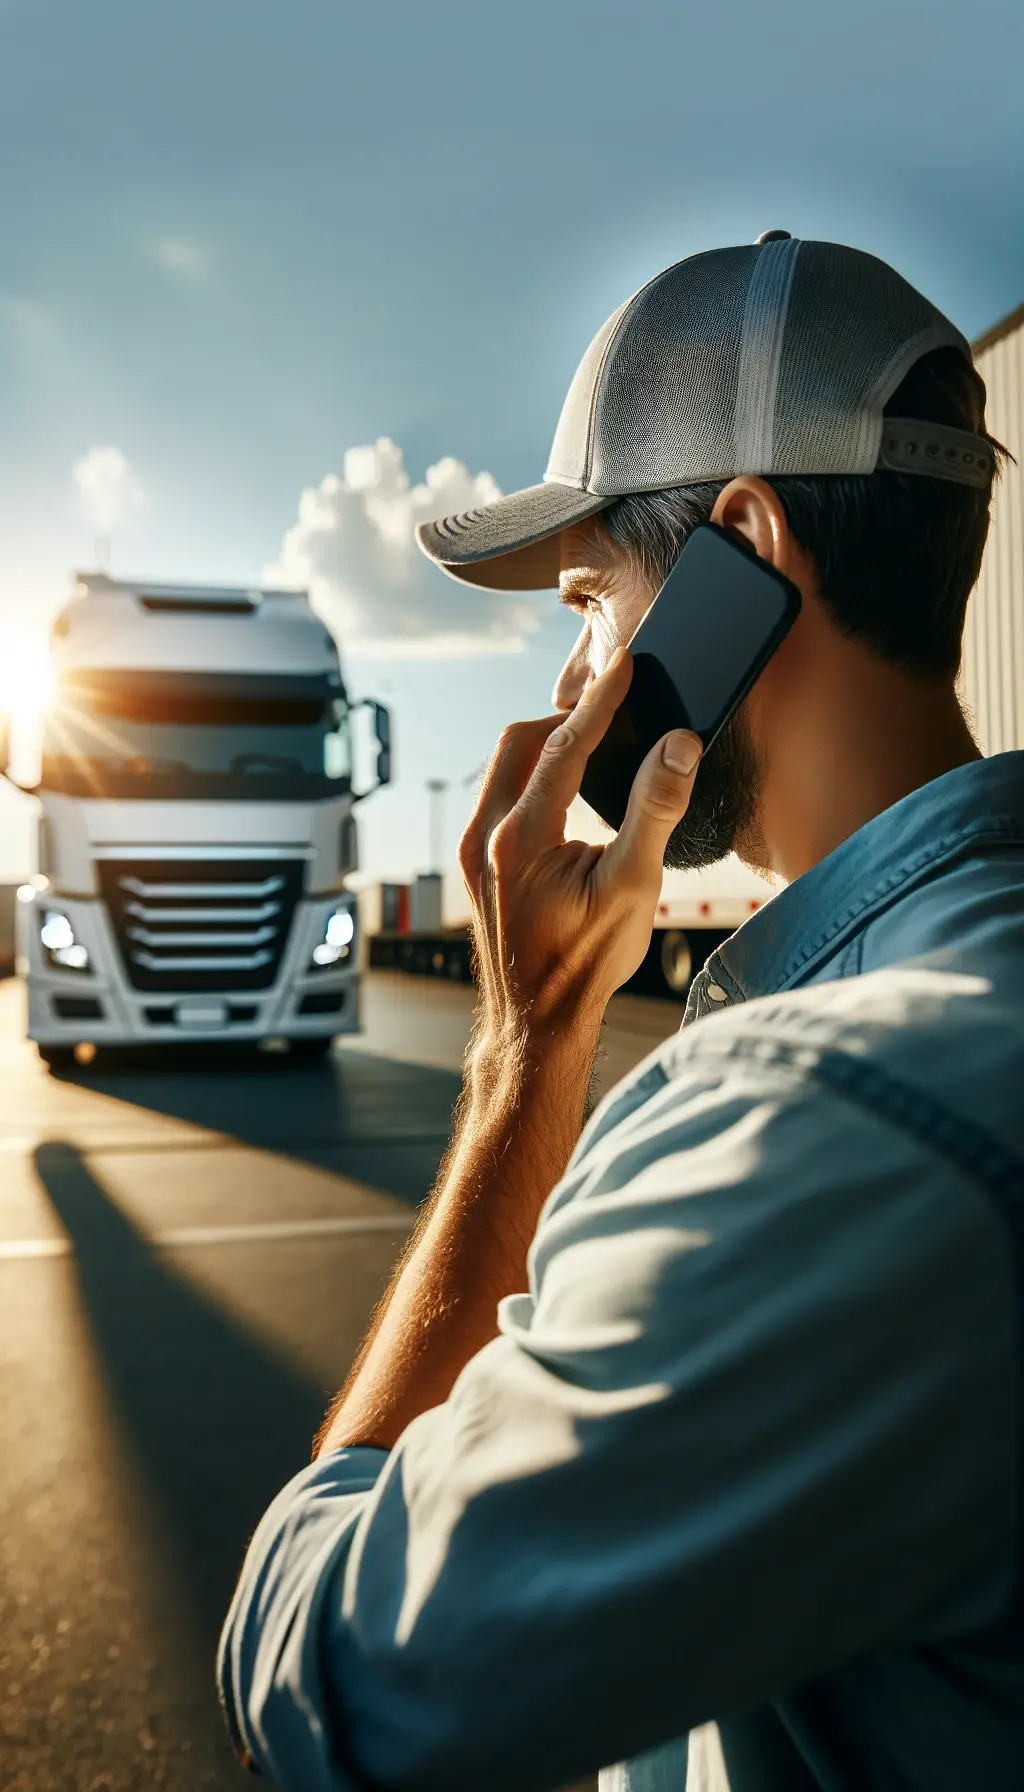 Truck driver making a phone call.